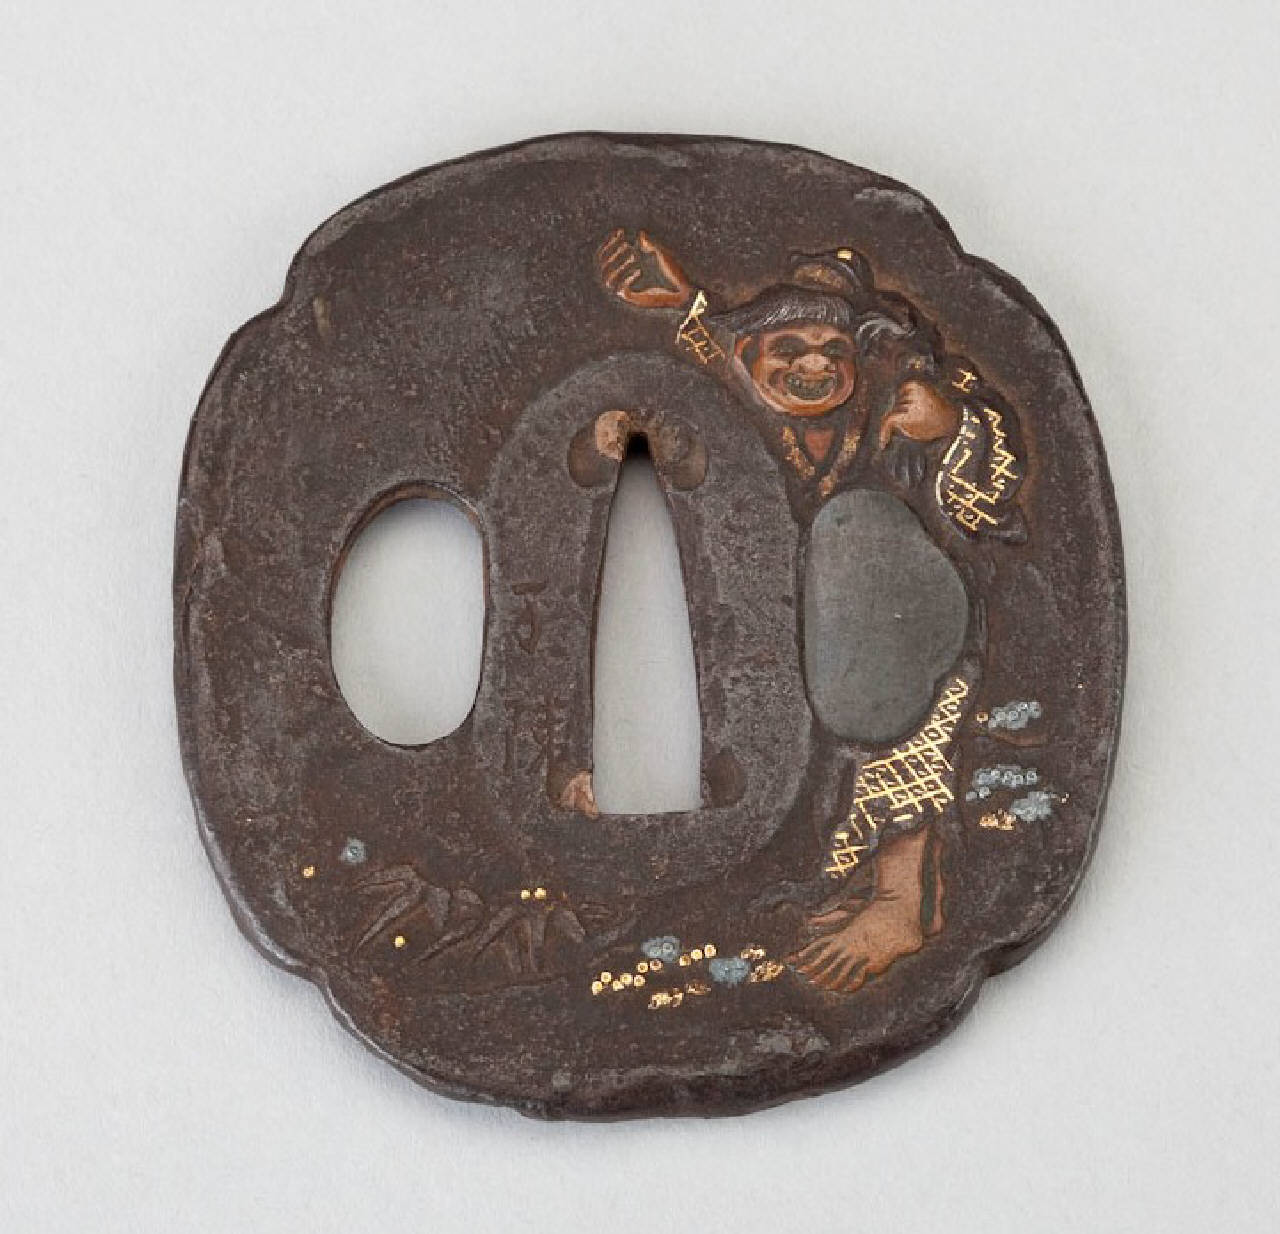 Gama Sennin e il rospo a tre zampe (elsa) - manifattura giapponese (secc. XVIII/ XIX)